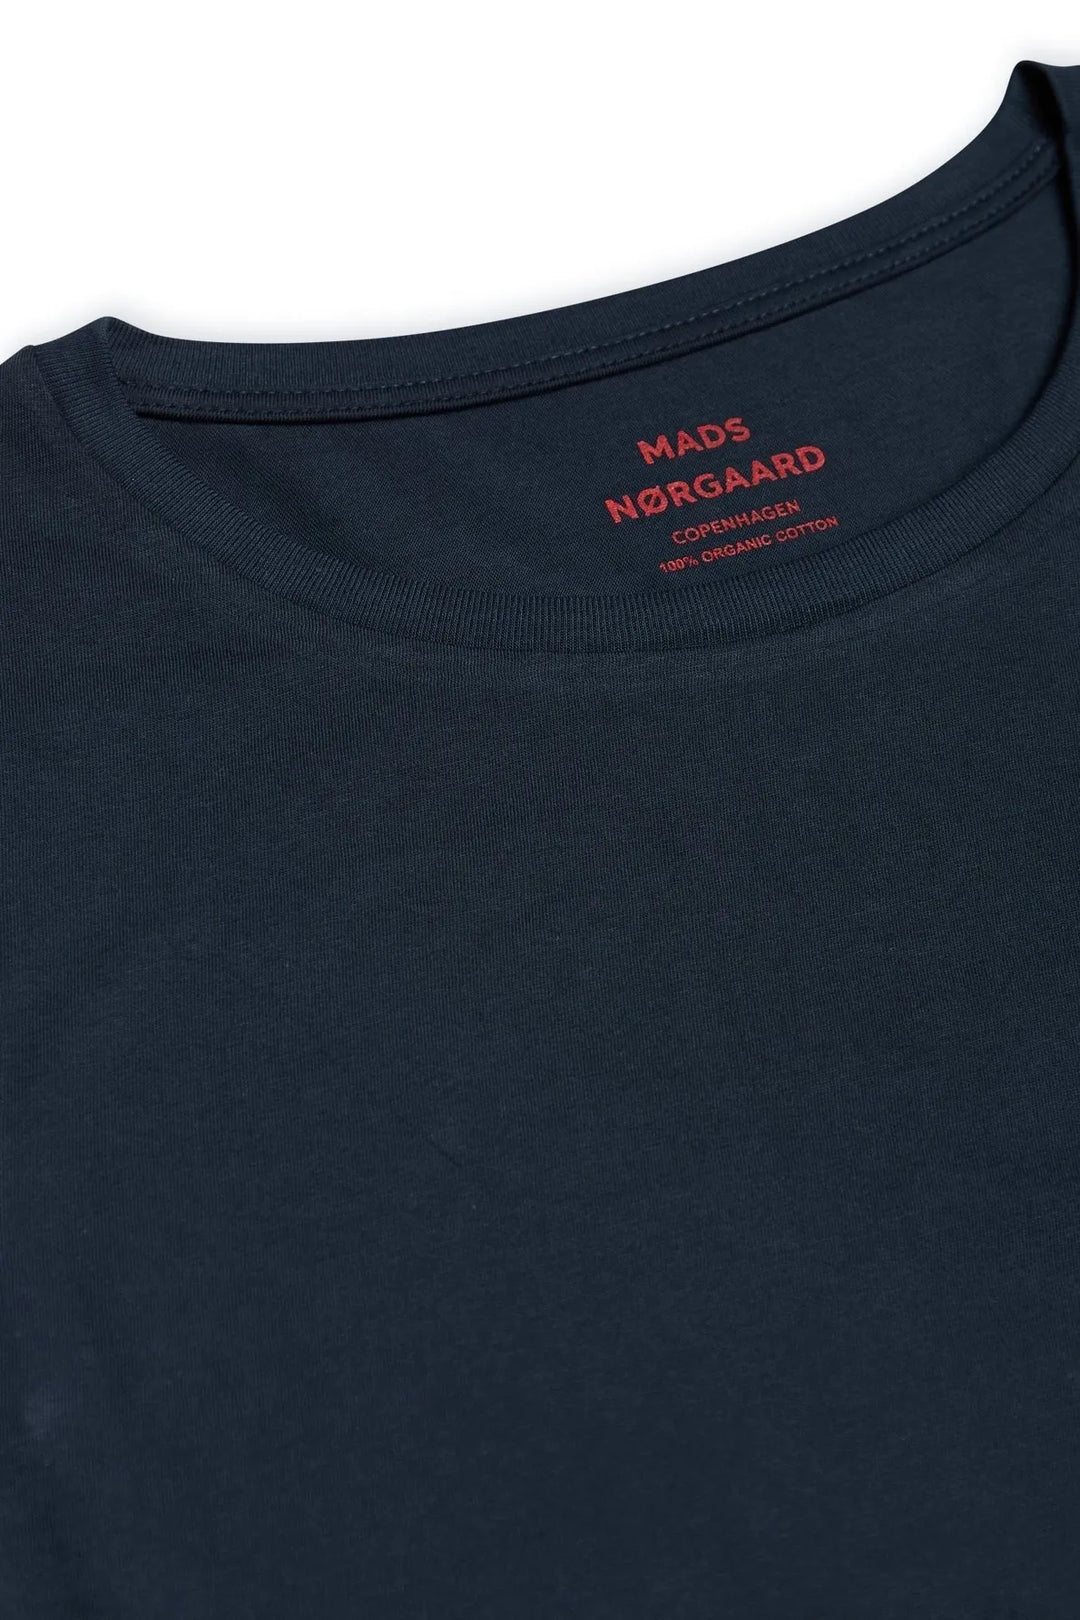 Mads Nørgaard | T-Shirt | Organic Jersey Teasy Tee FAV, 1721